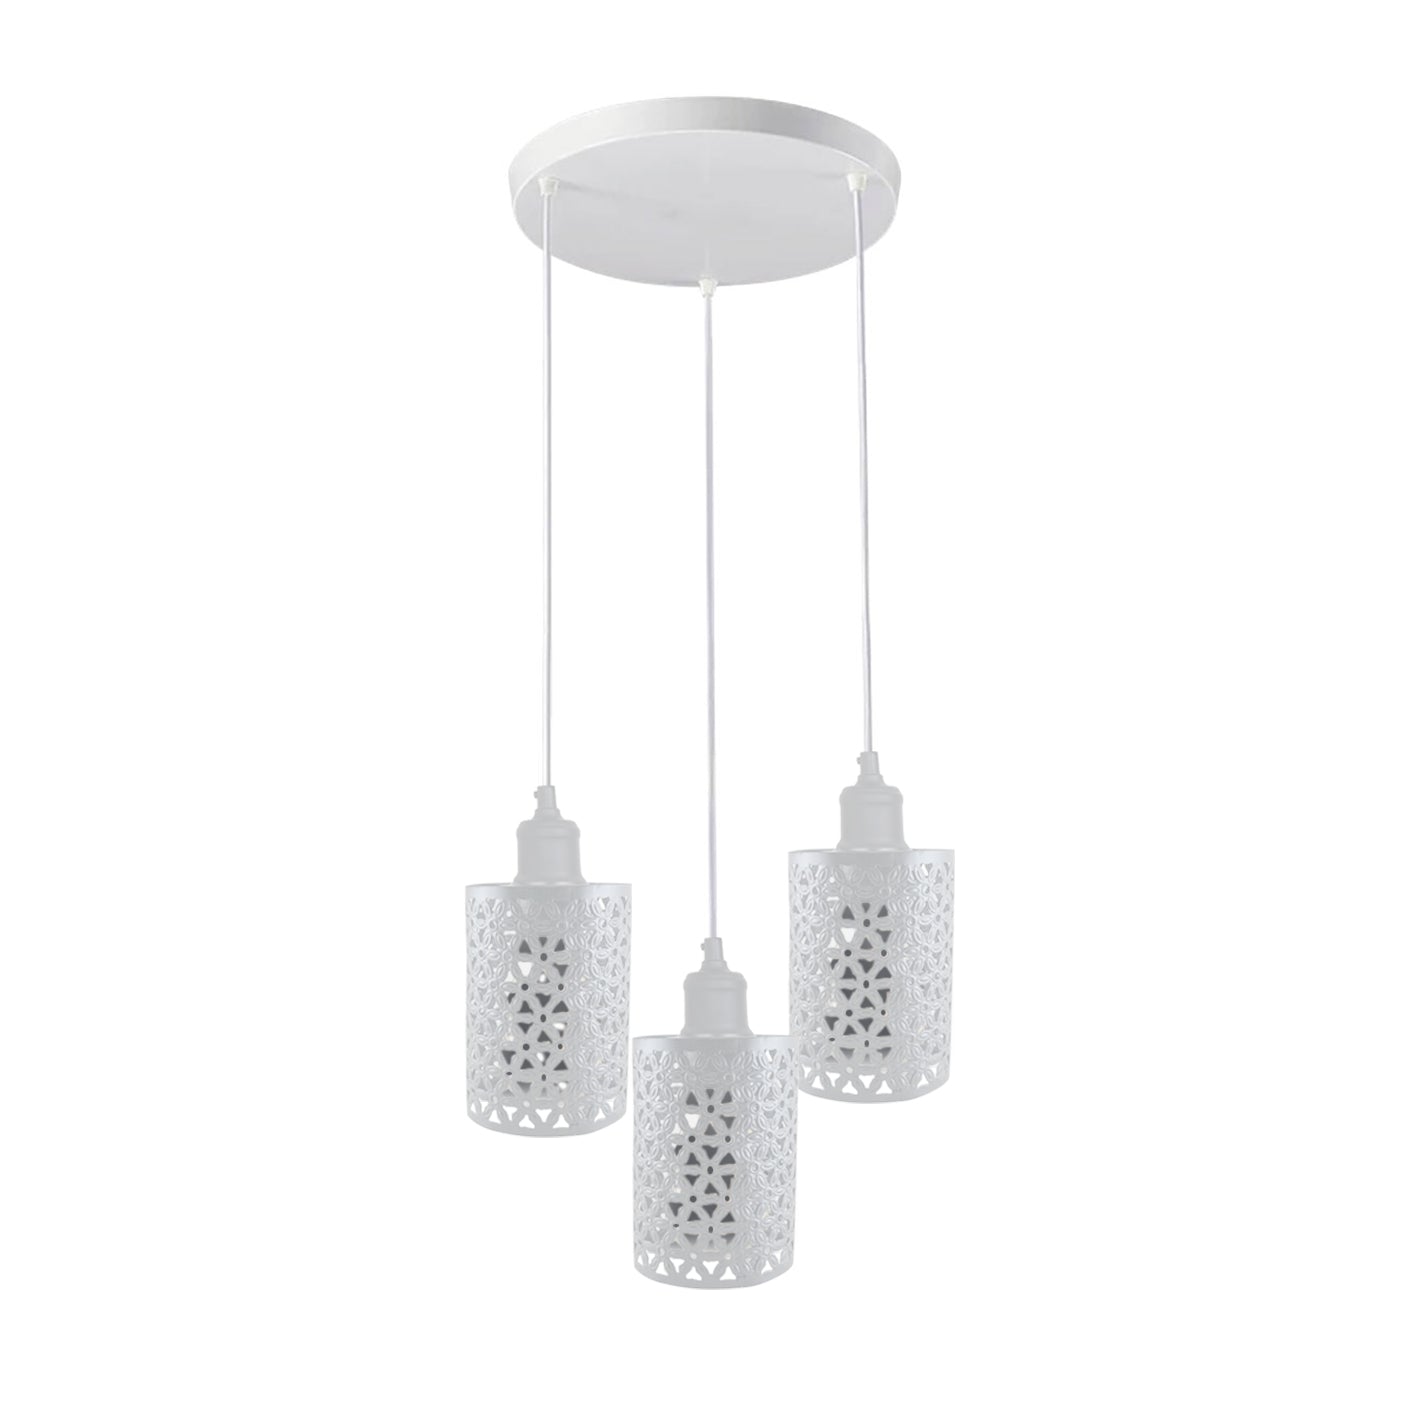 Industrial Retro 3 Way metallic Round Ceiling Pendent Lamp Shade